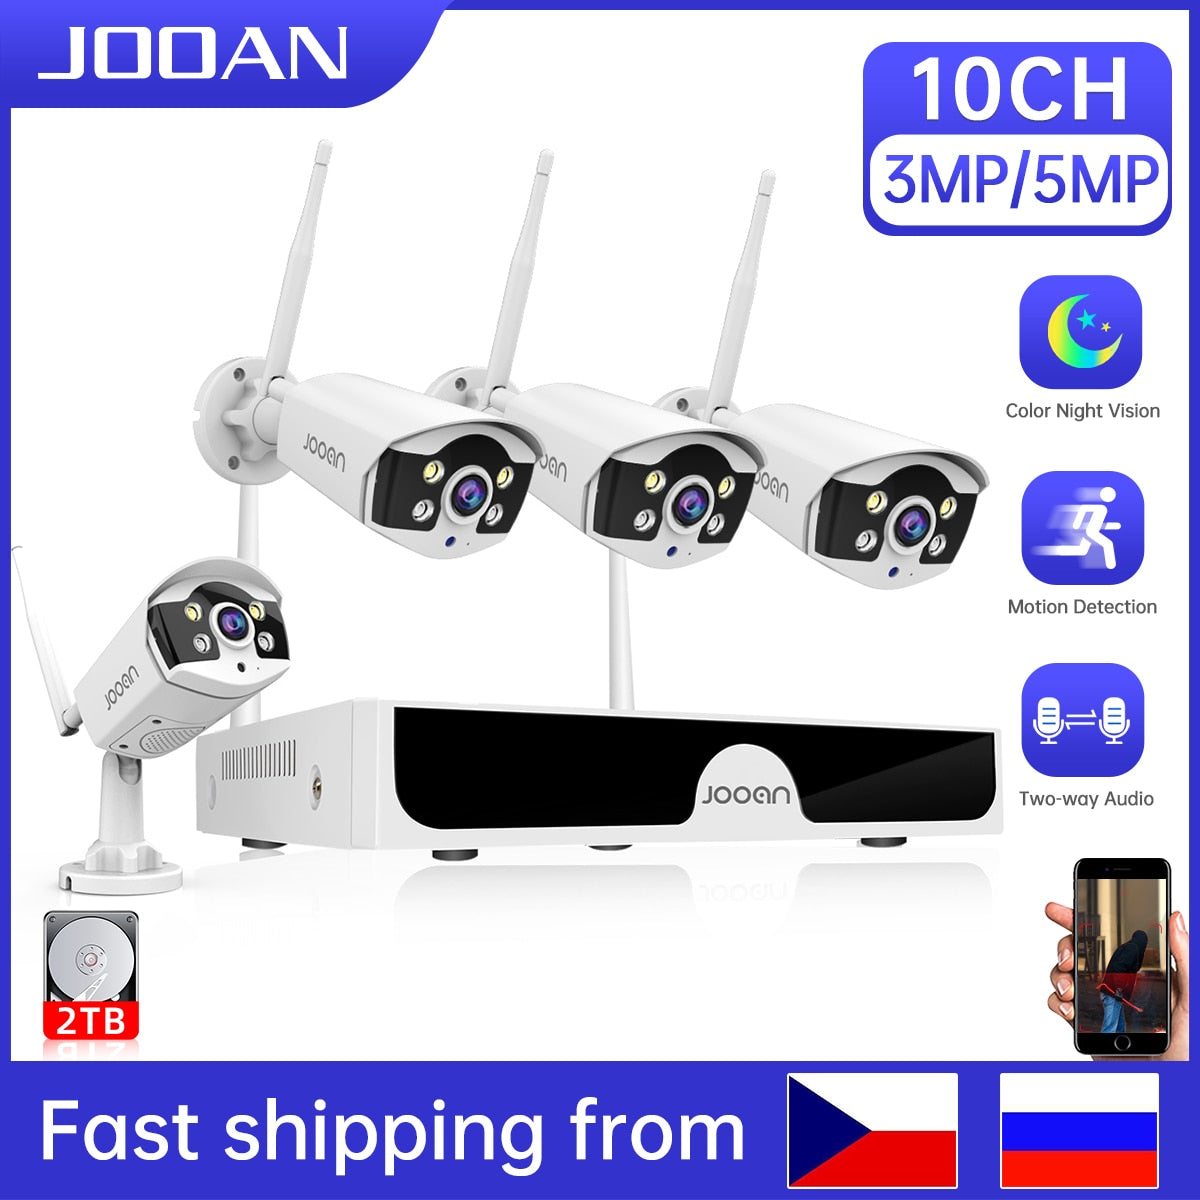 Jooan 10CH NVR 3MP 5MP Wireless Security Camera System Outdoor P2P WiFi IP Camera Set CCTV Camera Video Surveillance Kit NVR Set